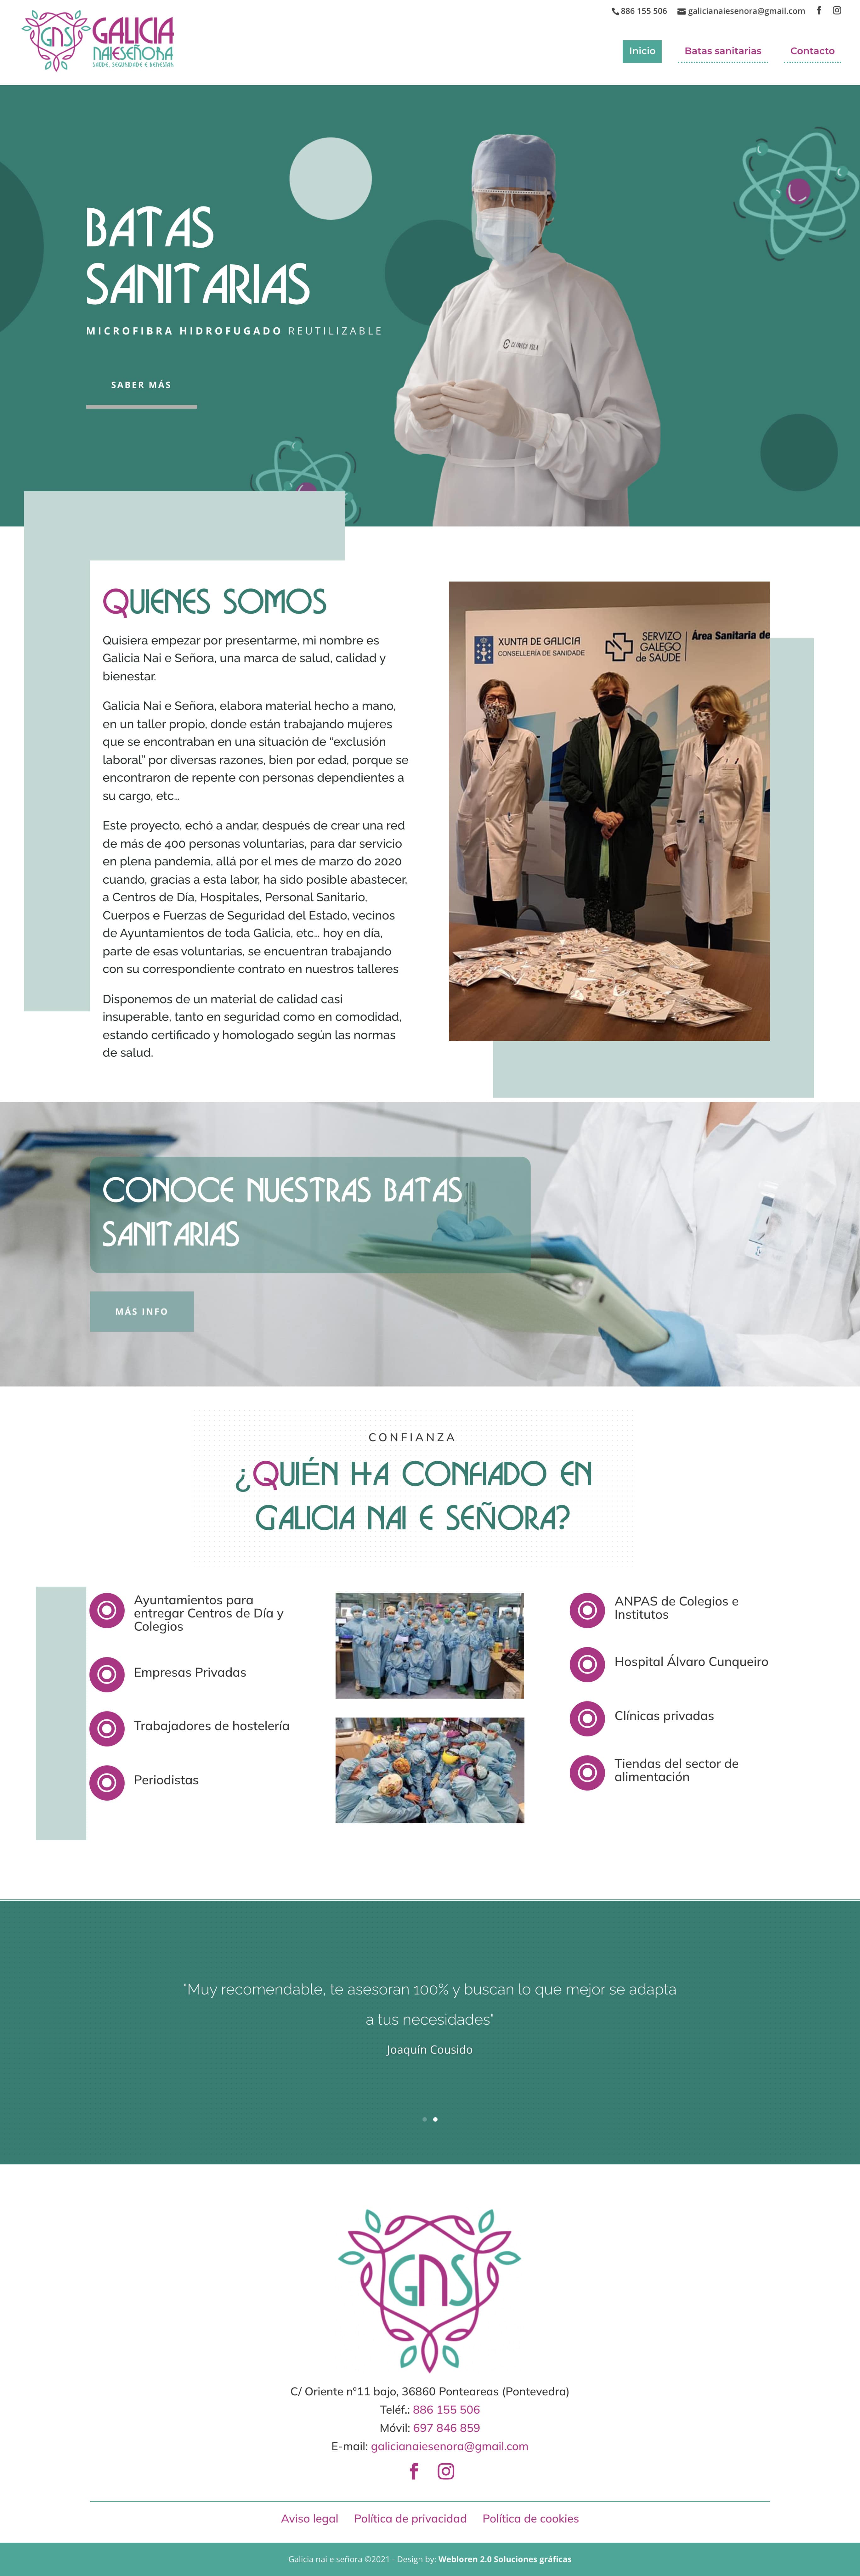 Captura web Galicia Nai e Señora realizada por Webloren 2.0 Soluciones Gráficas